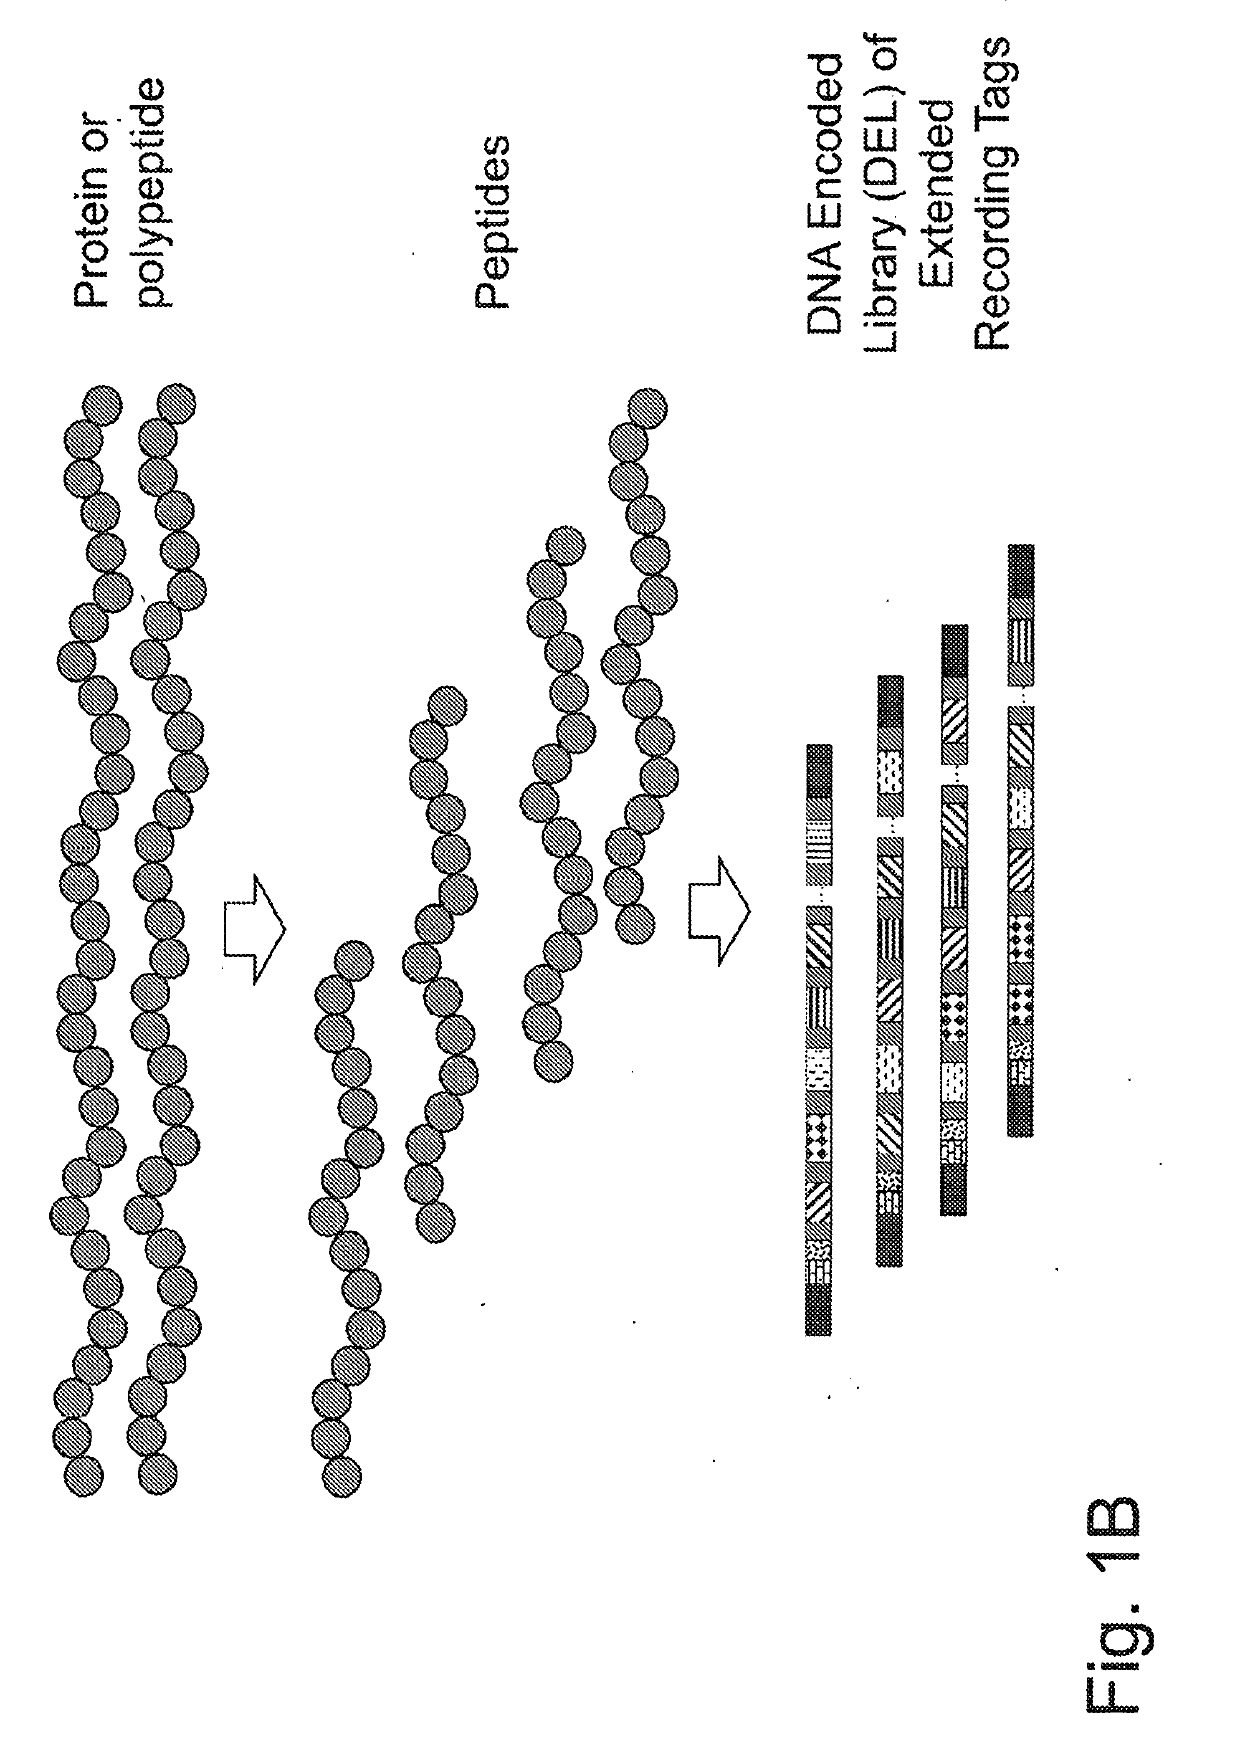 Macromolecule analysis employing nucleic acid encoding